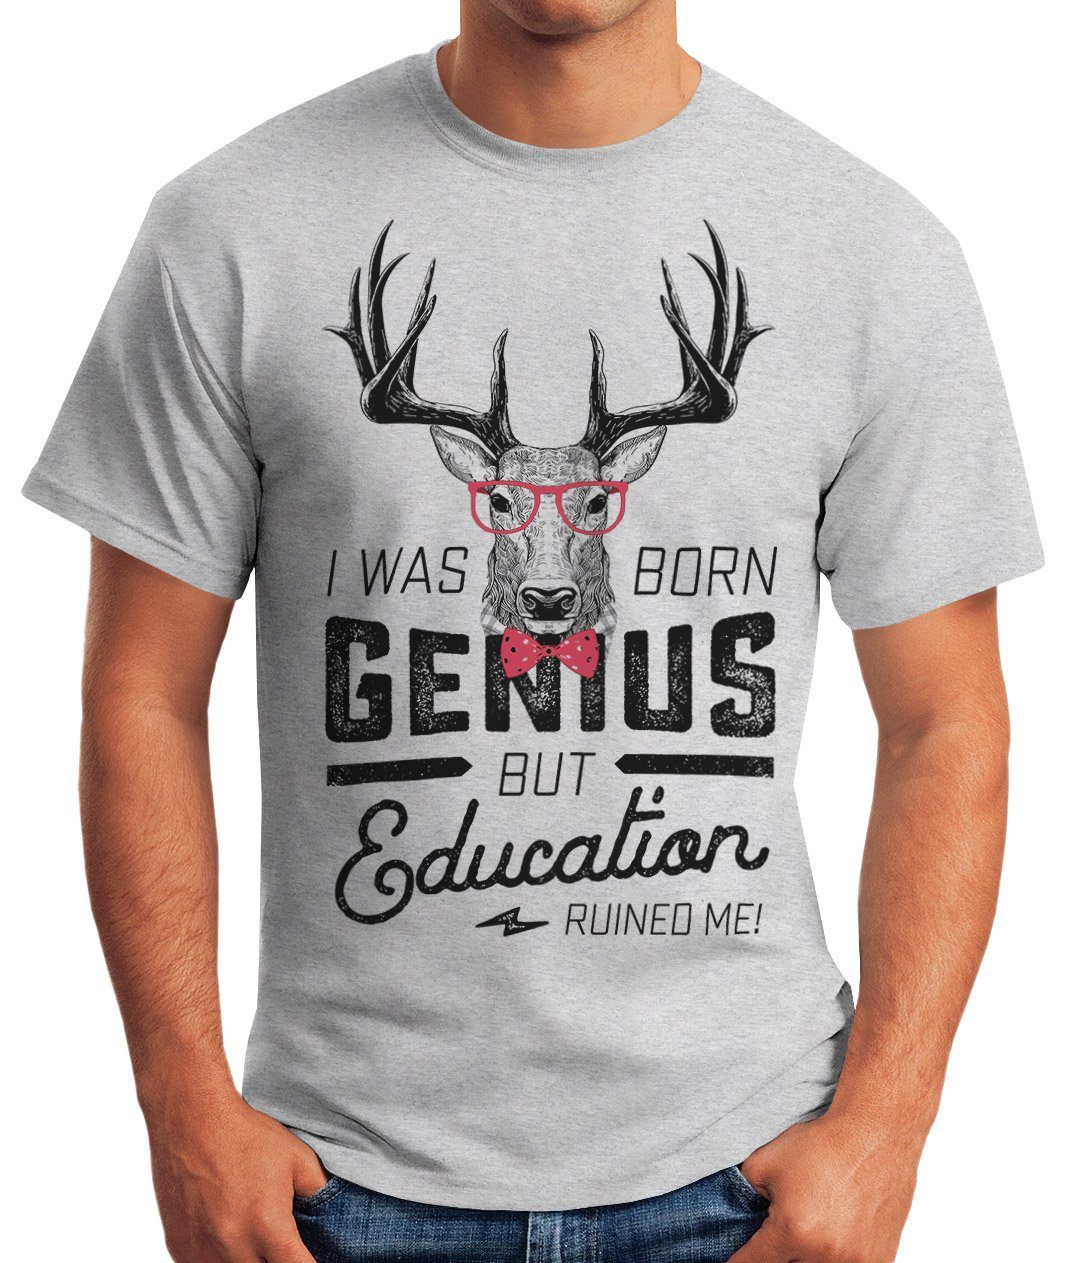 T-Shirt education MoonWorks me ruined genius Print-Shirt Print as born but mit I grau was Hirsch Herren mit Spruch Moonworks®